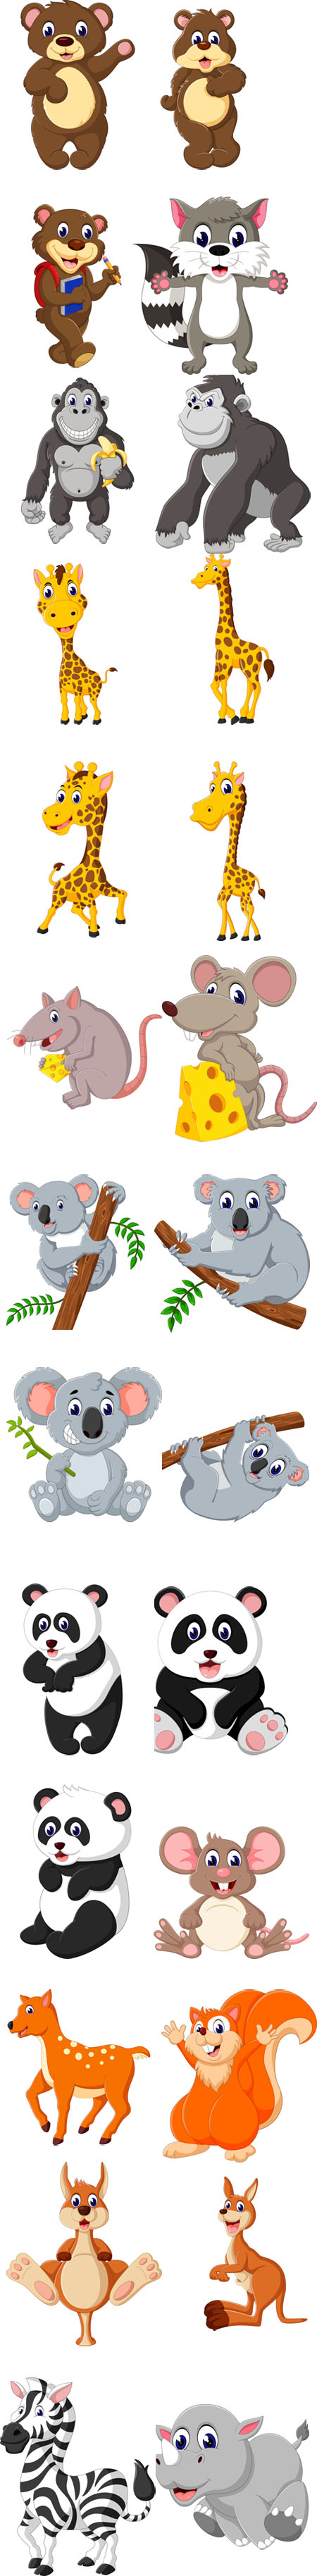 Illustration of cartoon animals - Vectors